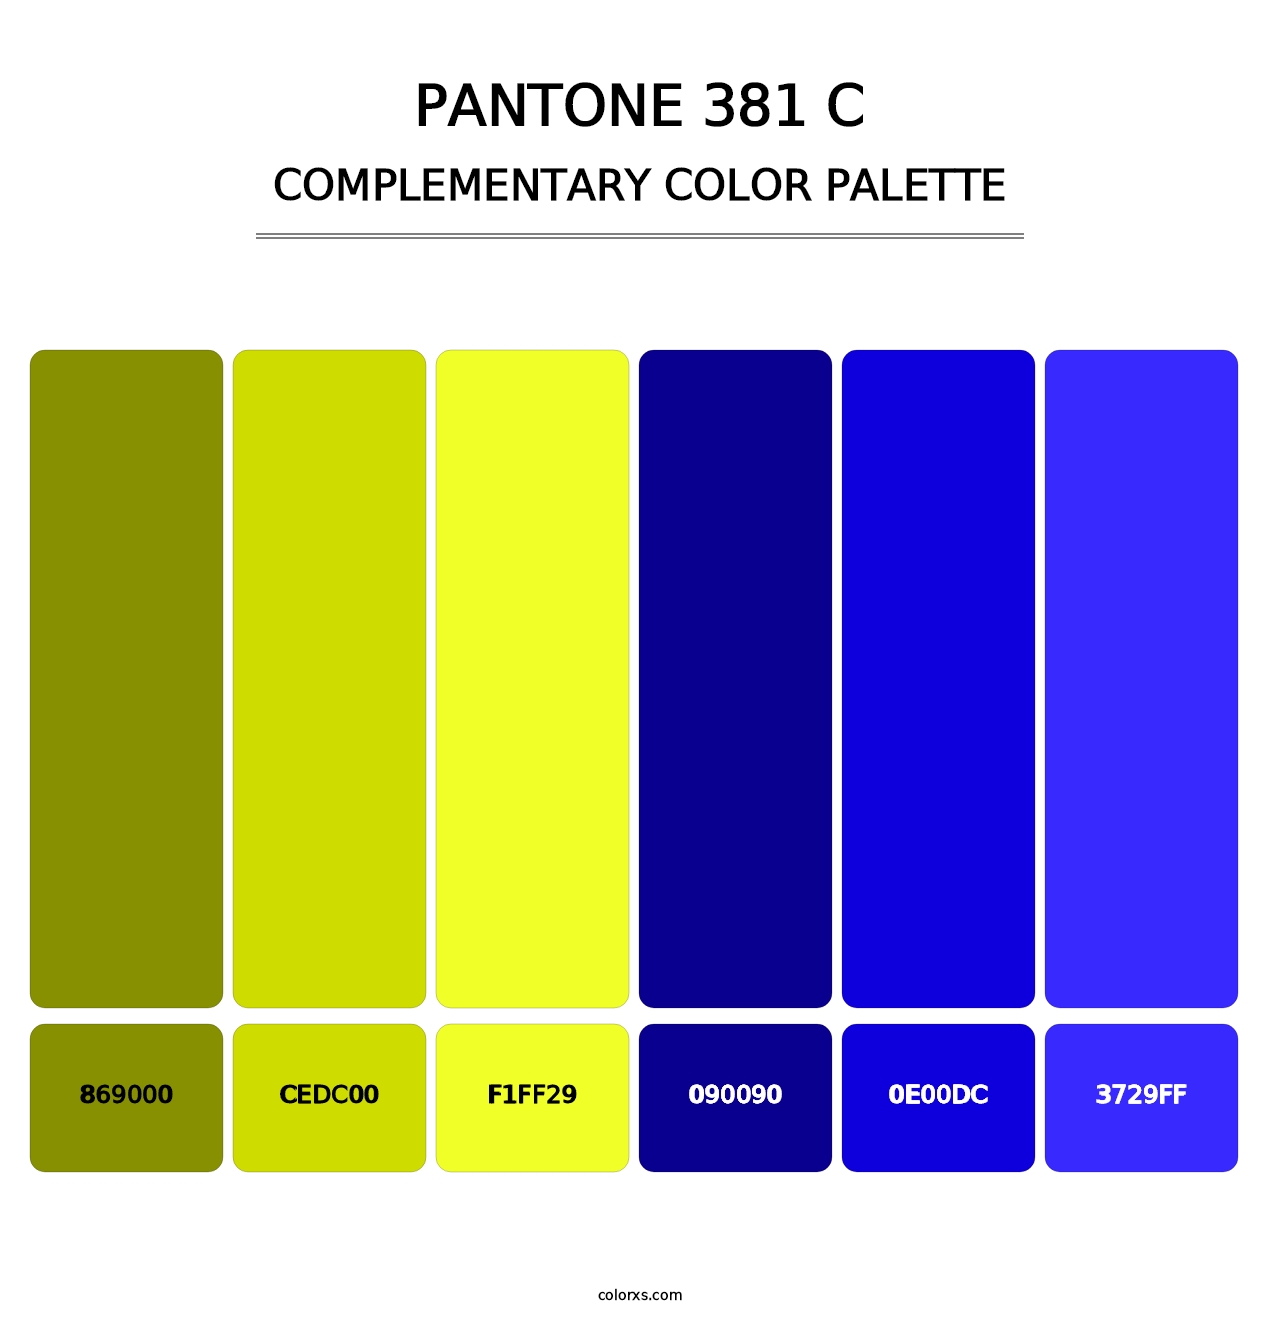 PANTONE 381 C - Complementary Color Palette